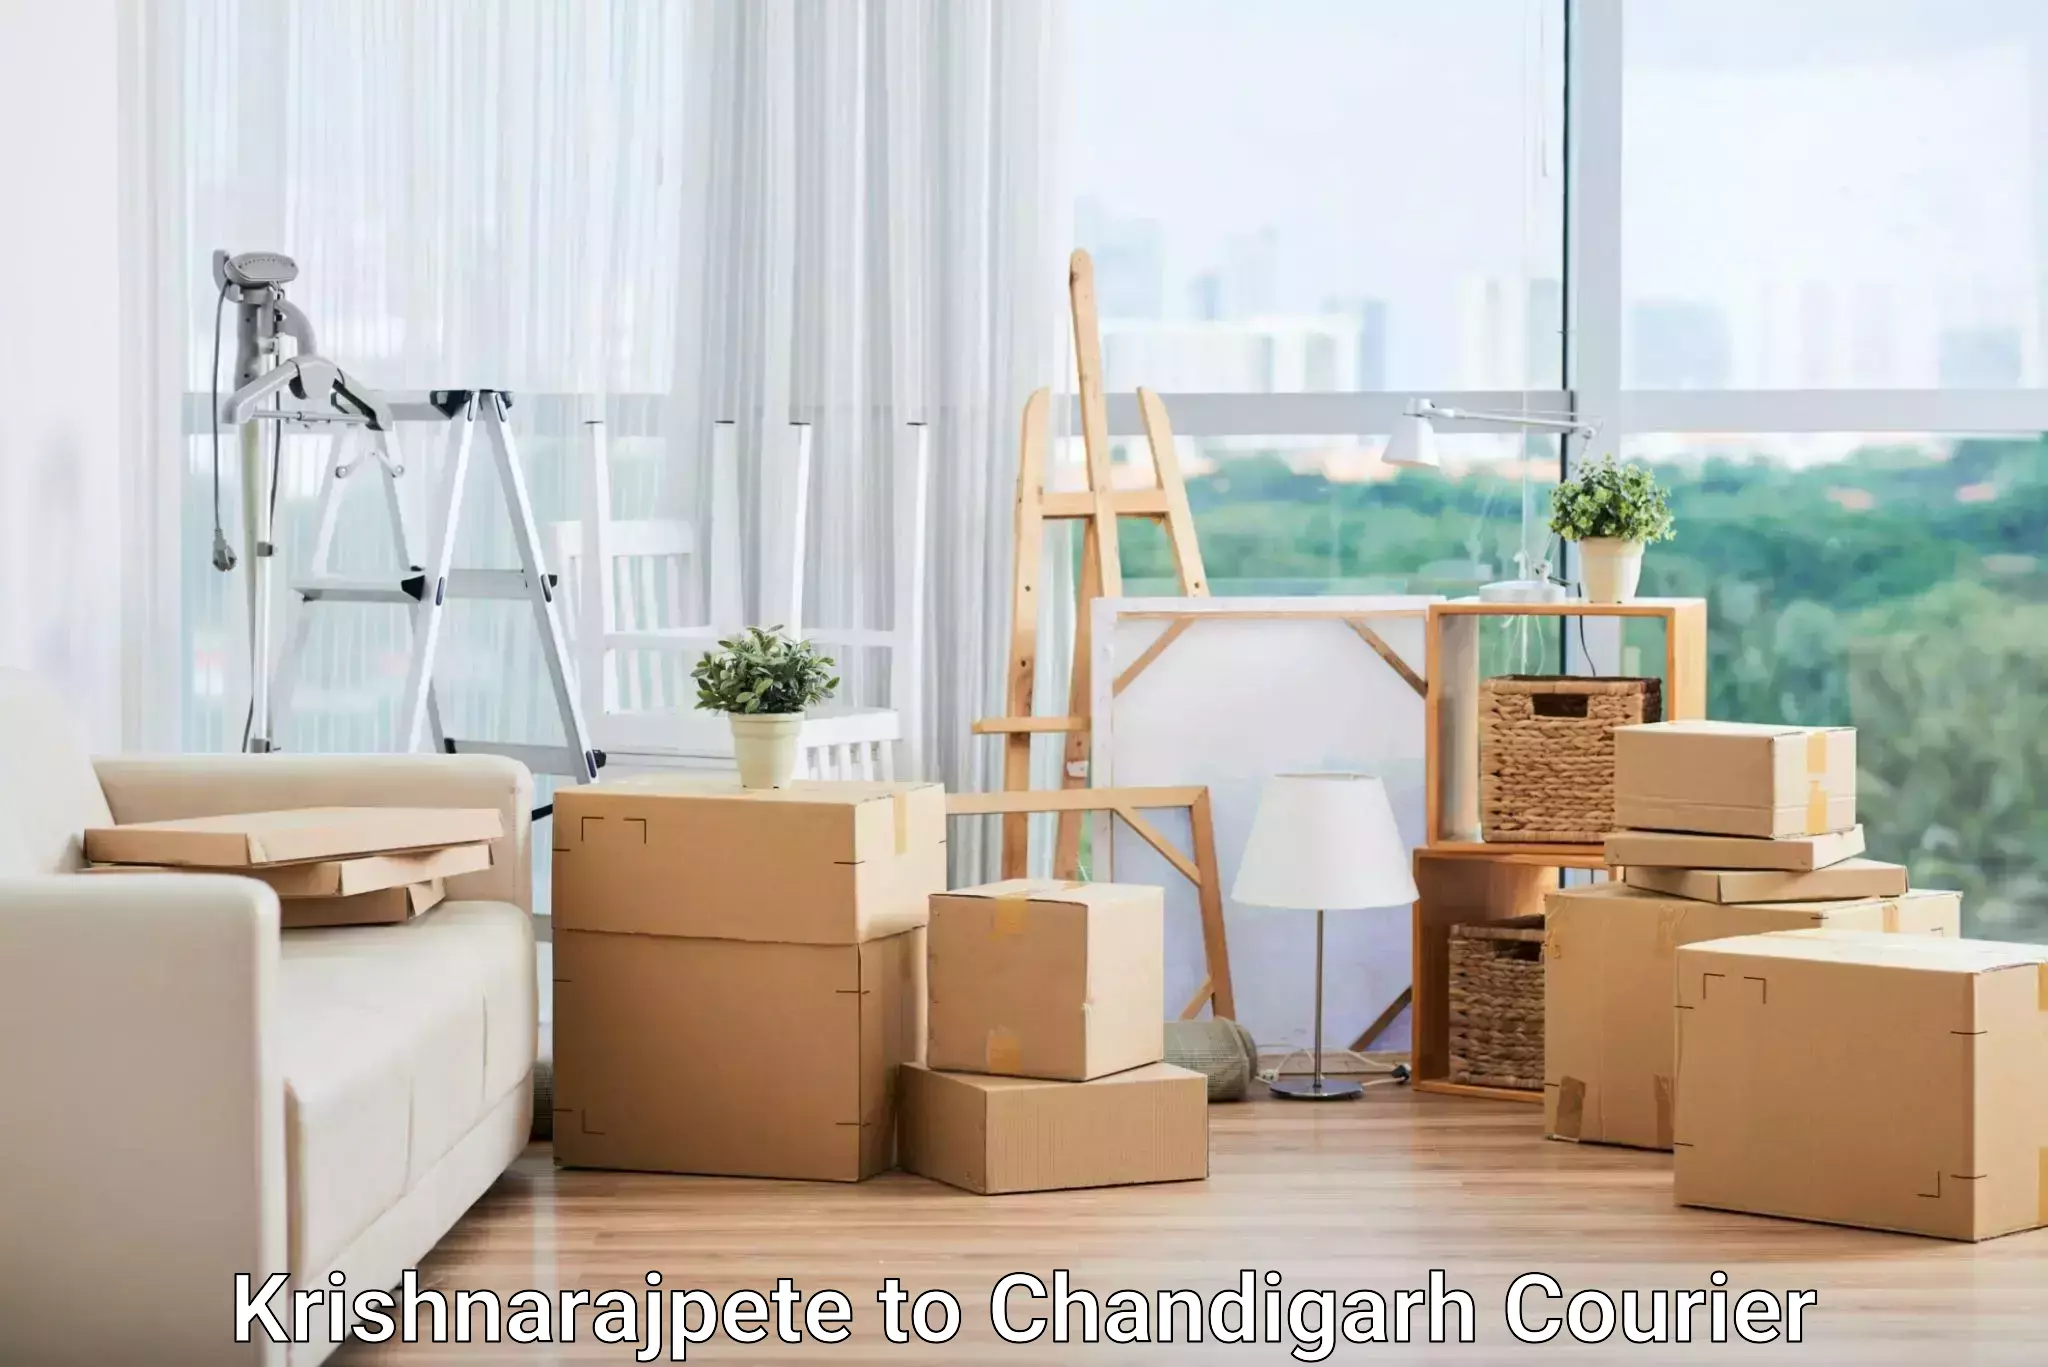 Express delivery capabilities Krishnarajpete to Chandigarh